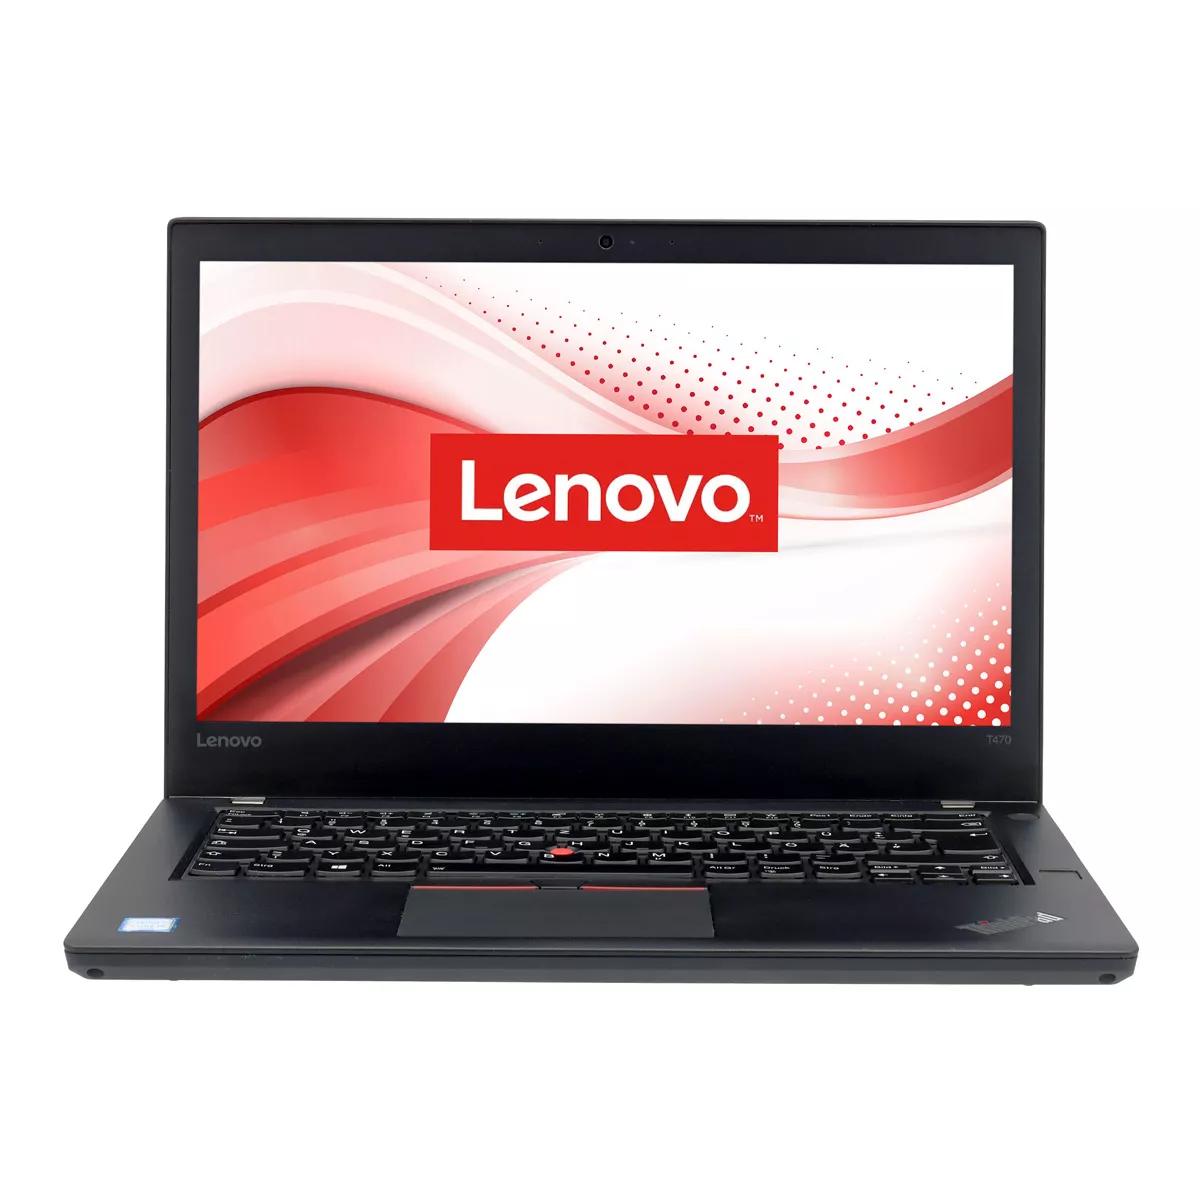 Lenovo ThinkPad T470 Core i5 6300U Full-HD 240 GB M.2 SSD Touch Webcam A